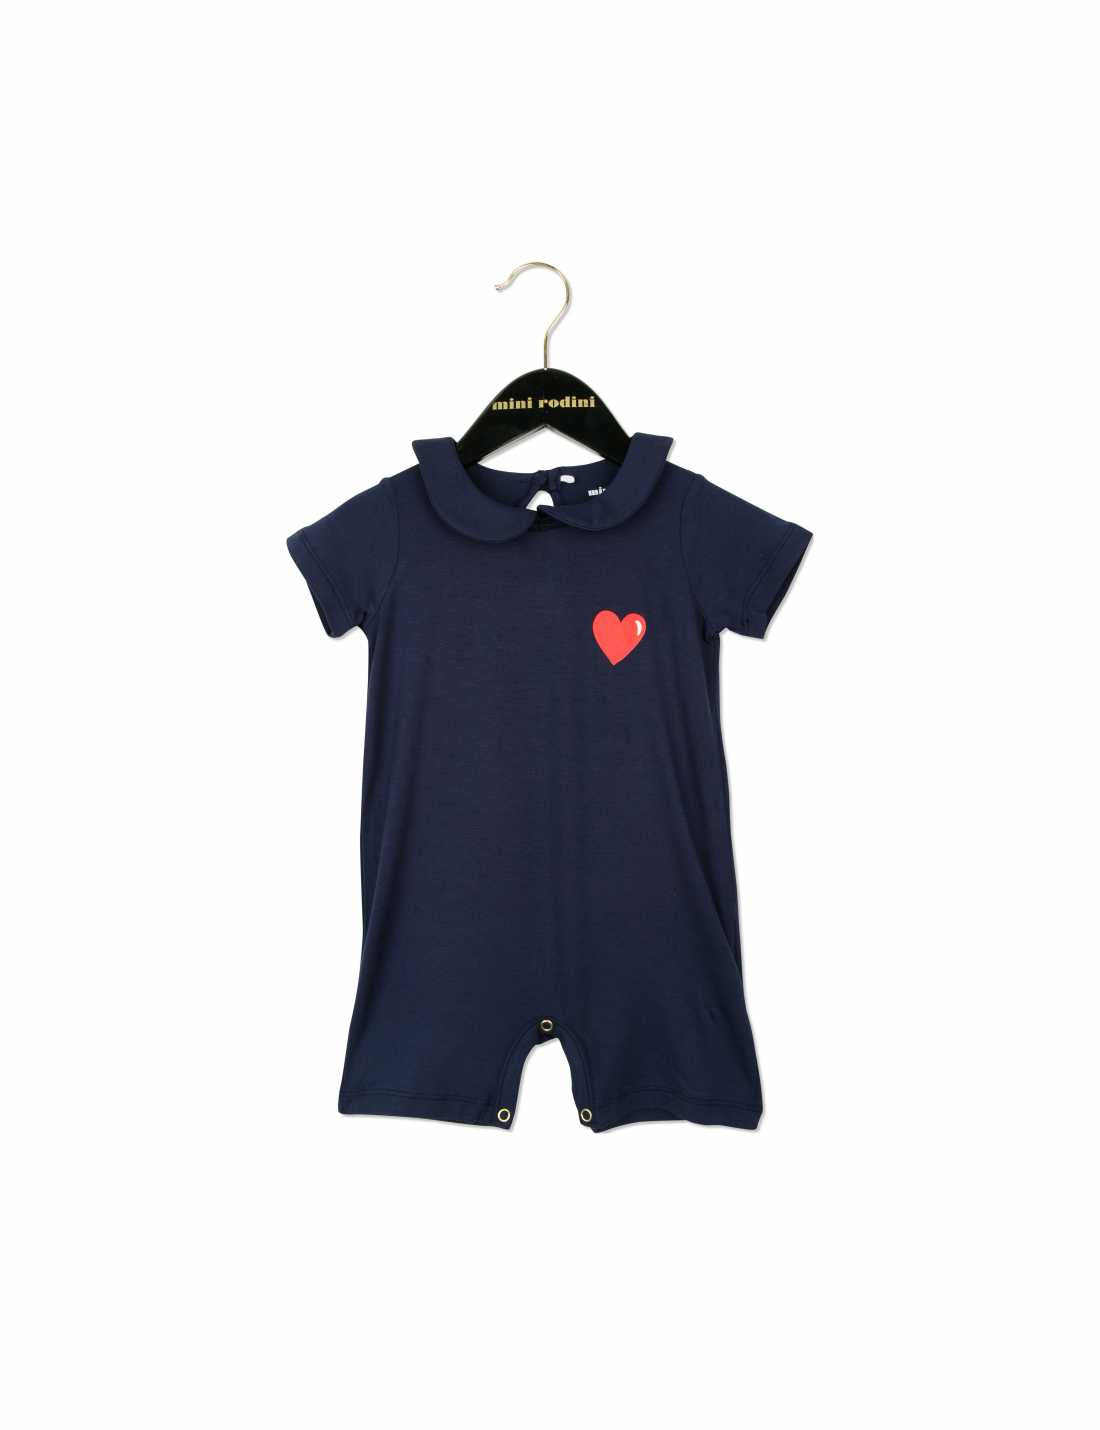 Baby Dark Blue Babygrow With Red Heart Print - CÉMAROSE | Children's Fashion Store - 1